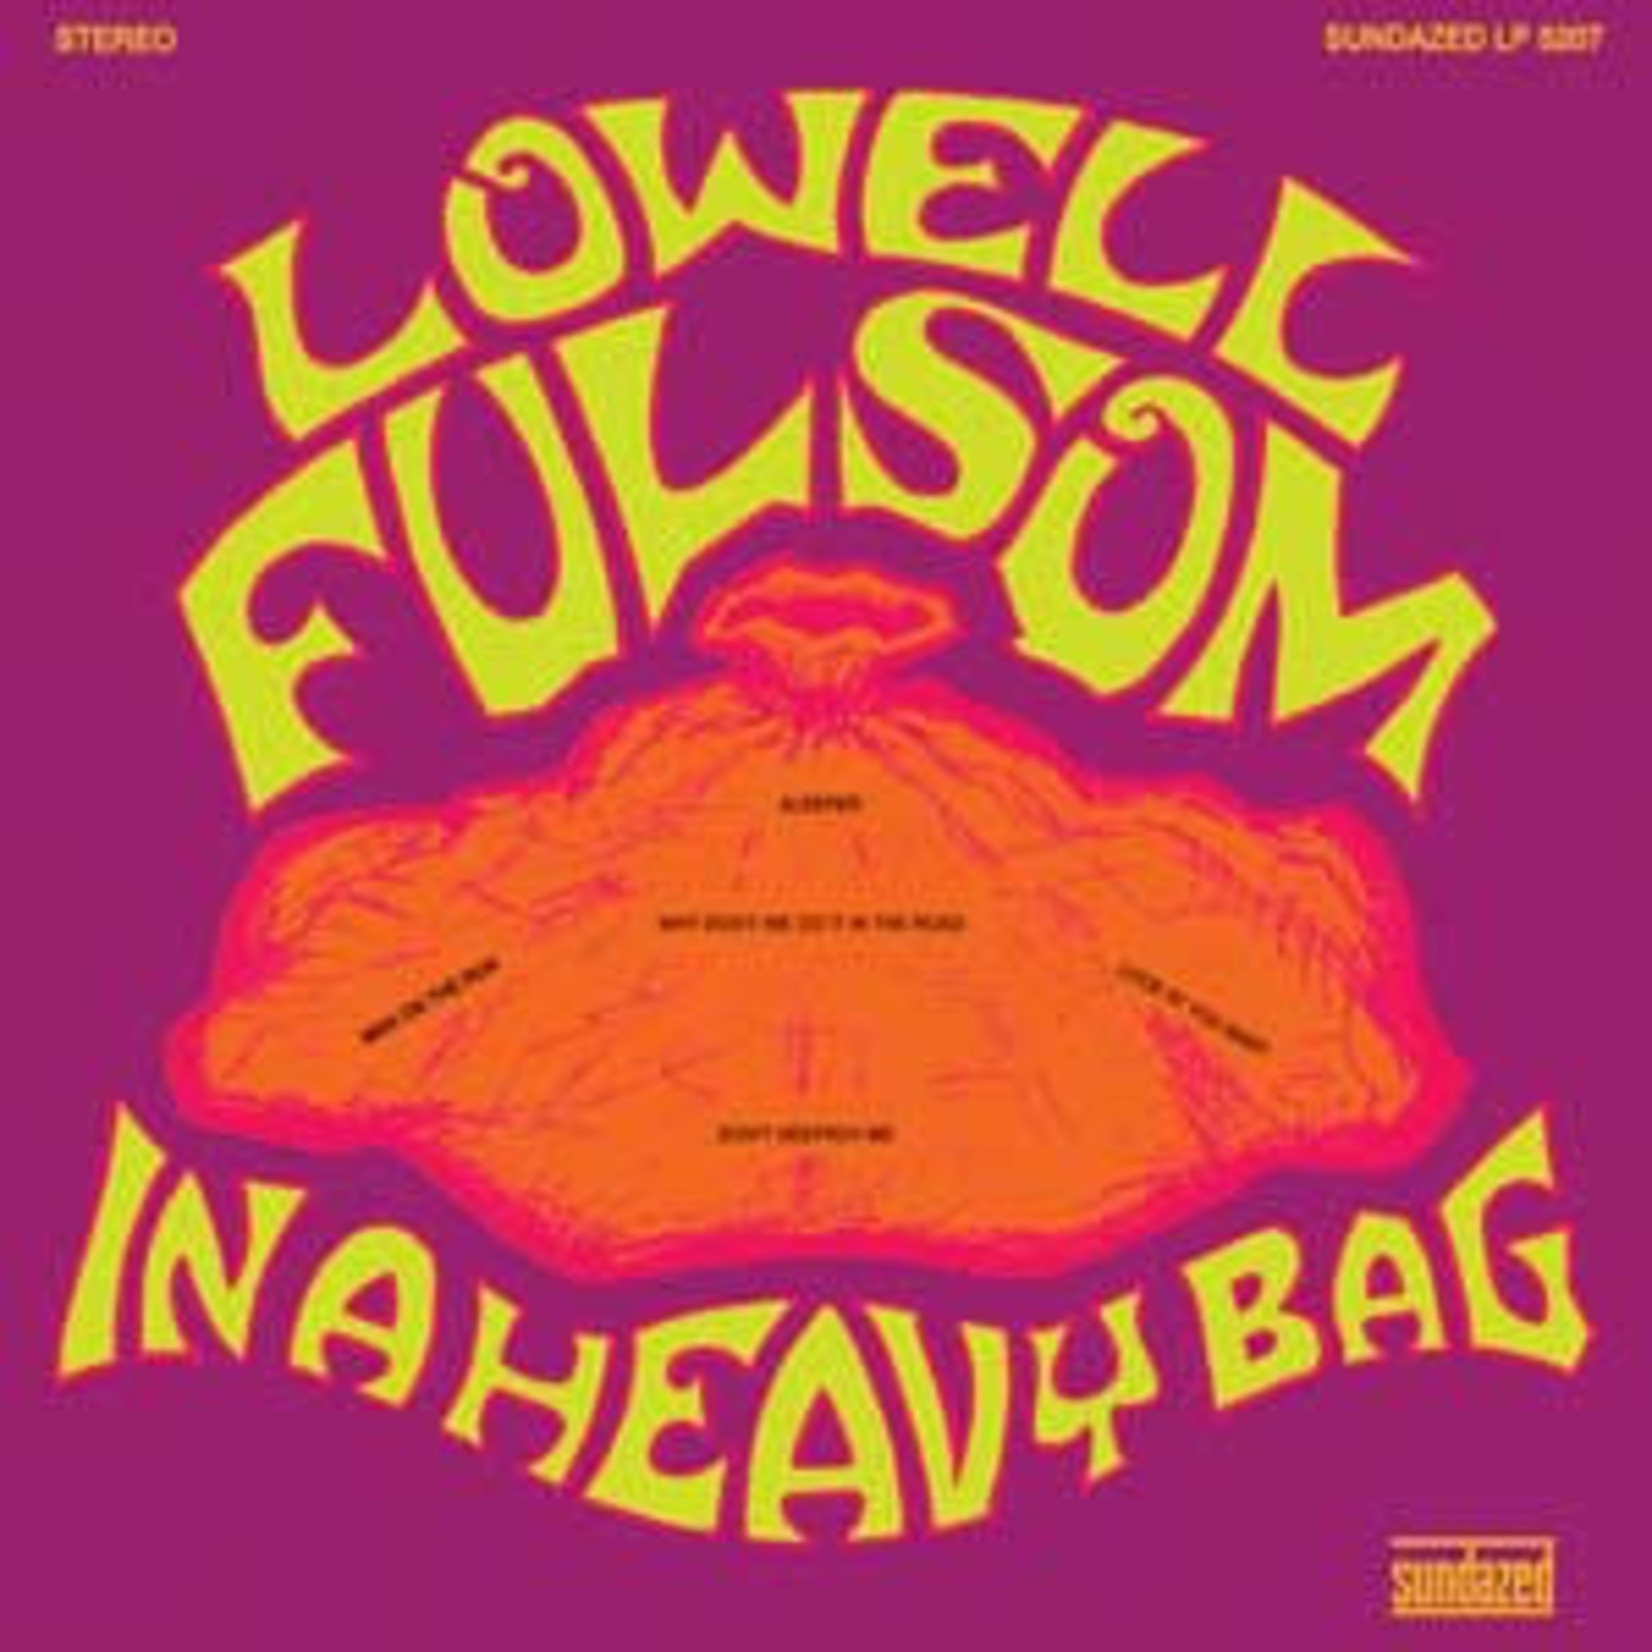 Lowell Fulson - In A Heavy Bag [LP]